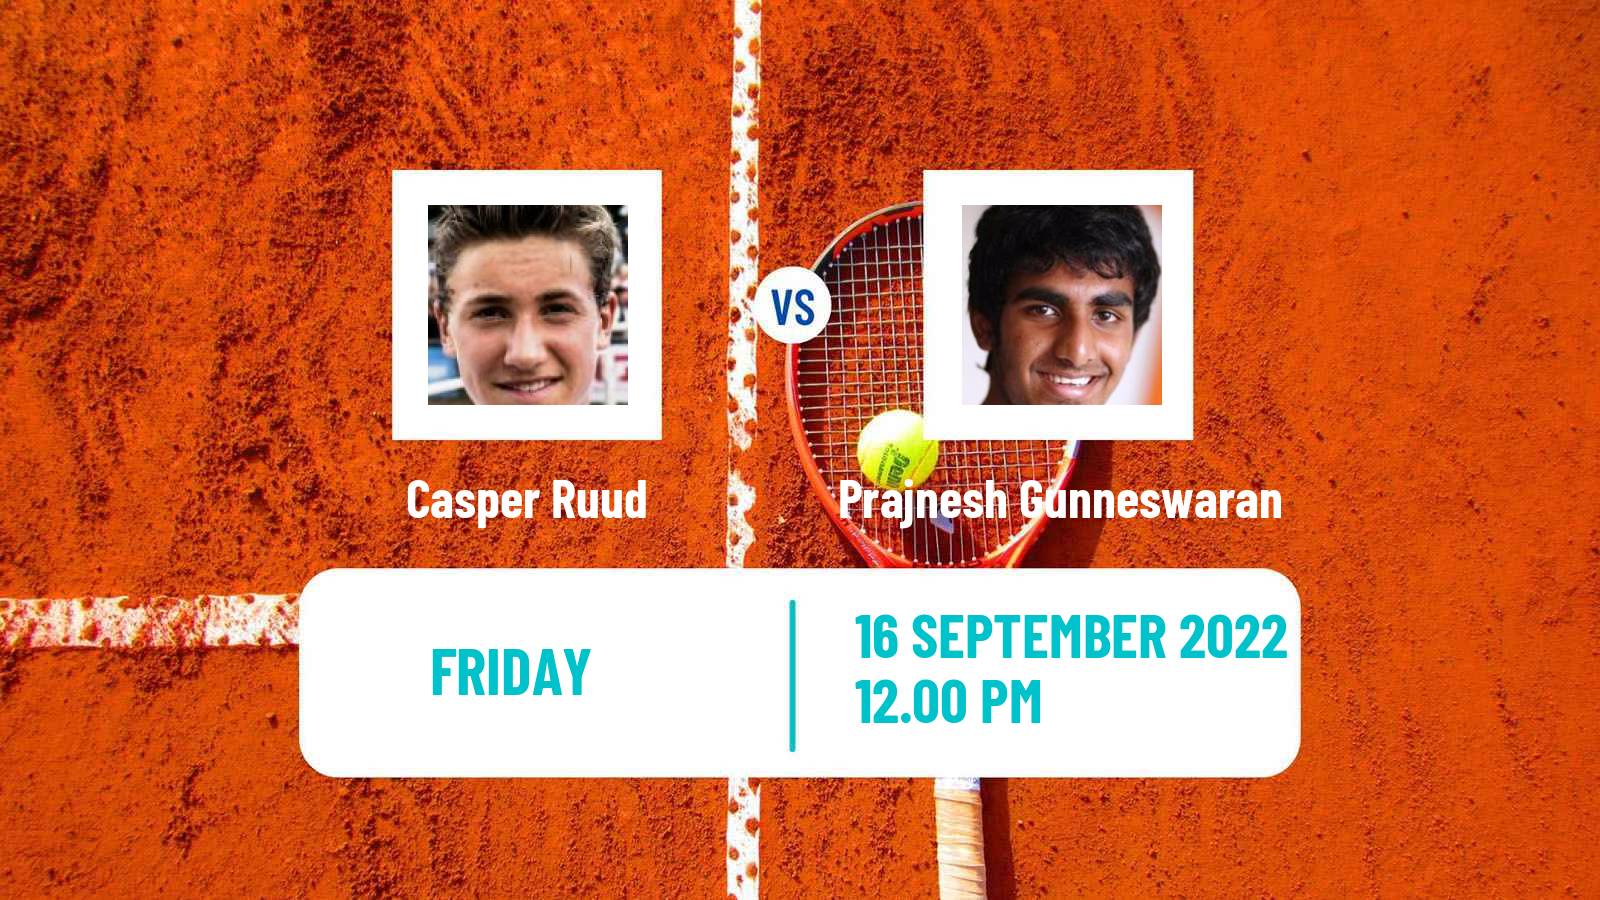 Tennis Davis Cup World Group I Casper Ruud - Prajnesh Gunneswaran